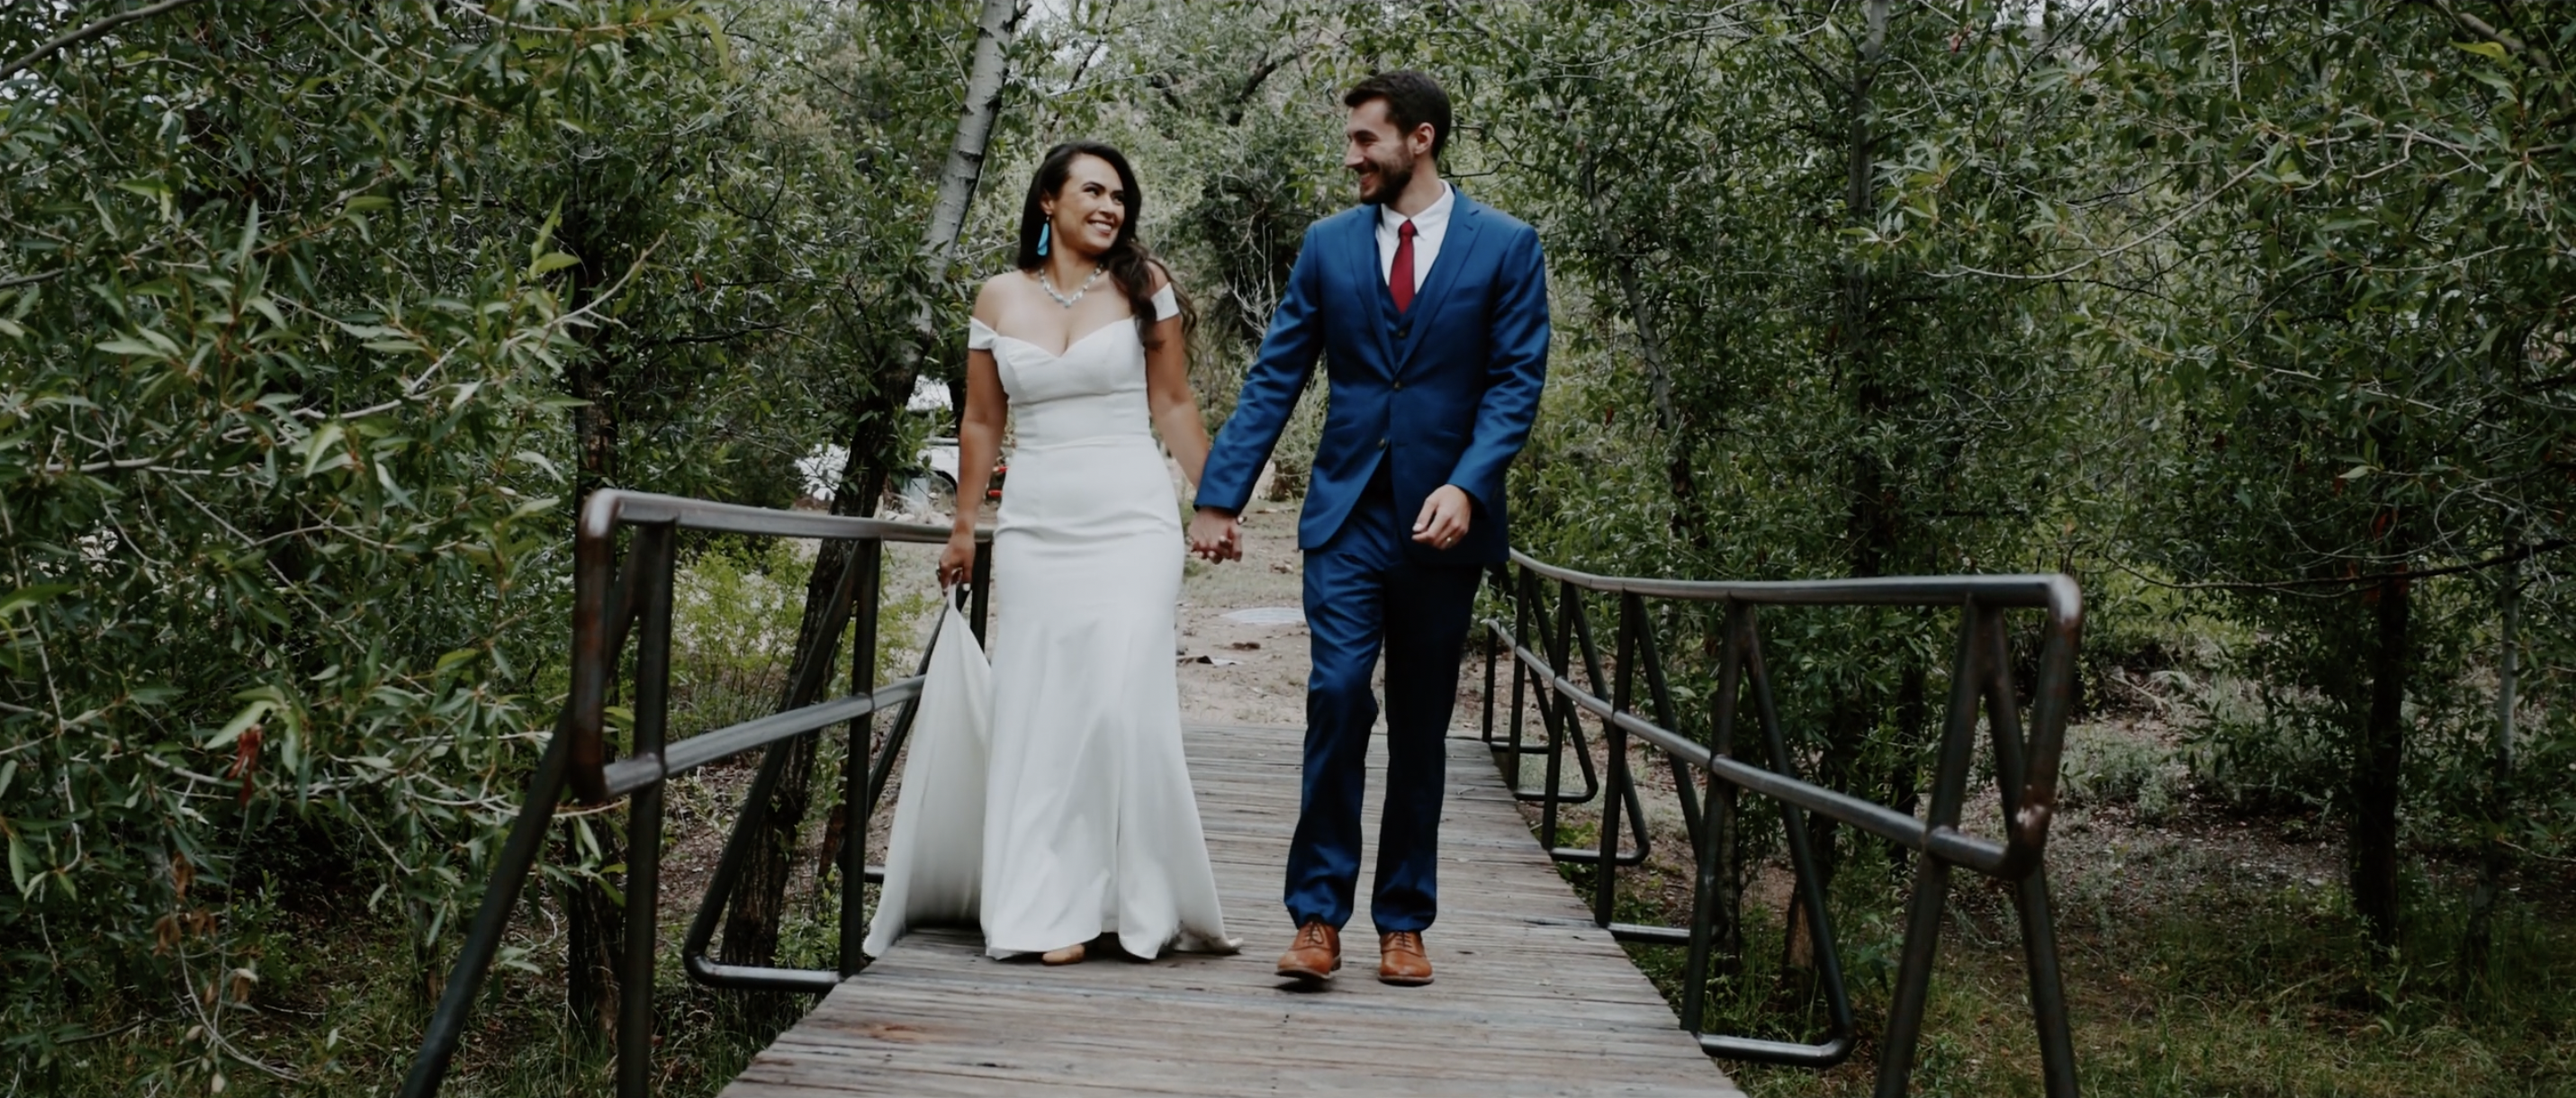 Bride and groom walk hand in hand over a rustic bridge